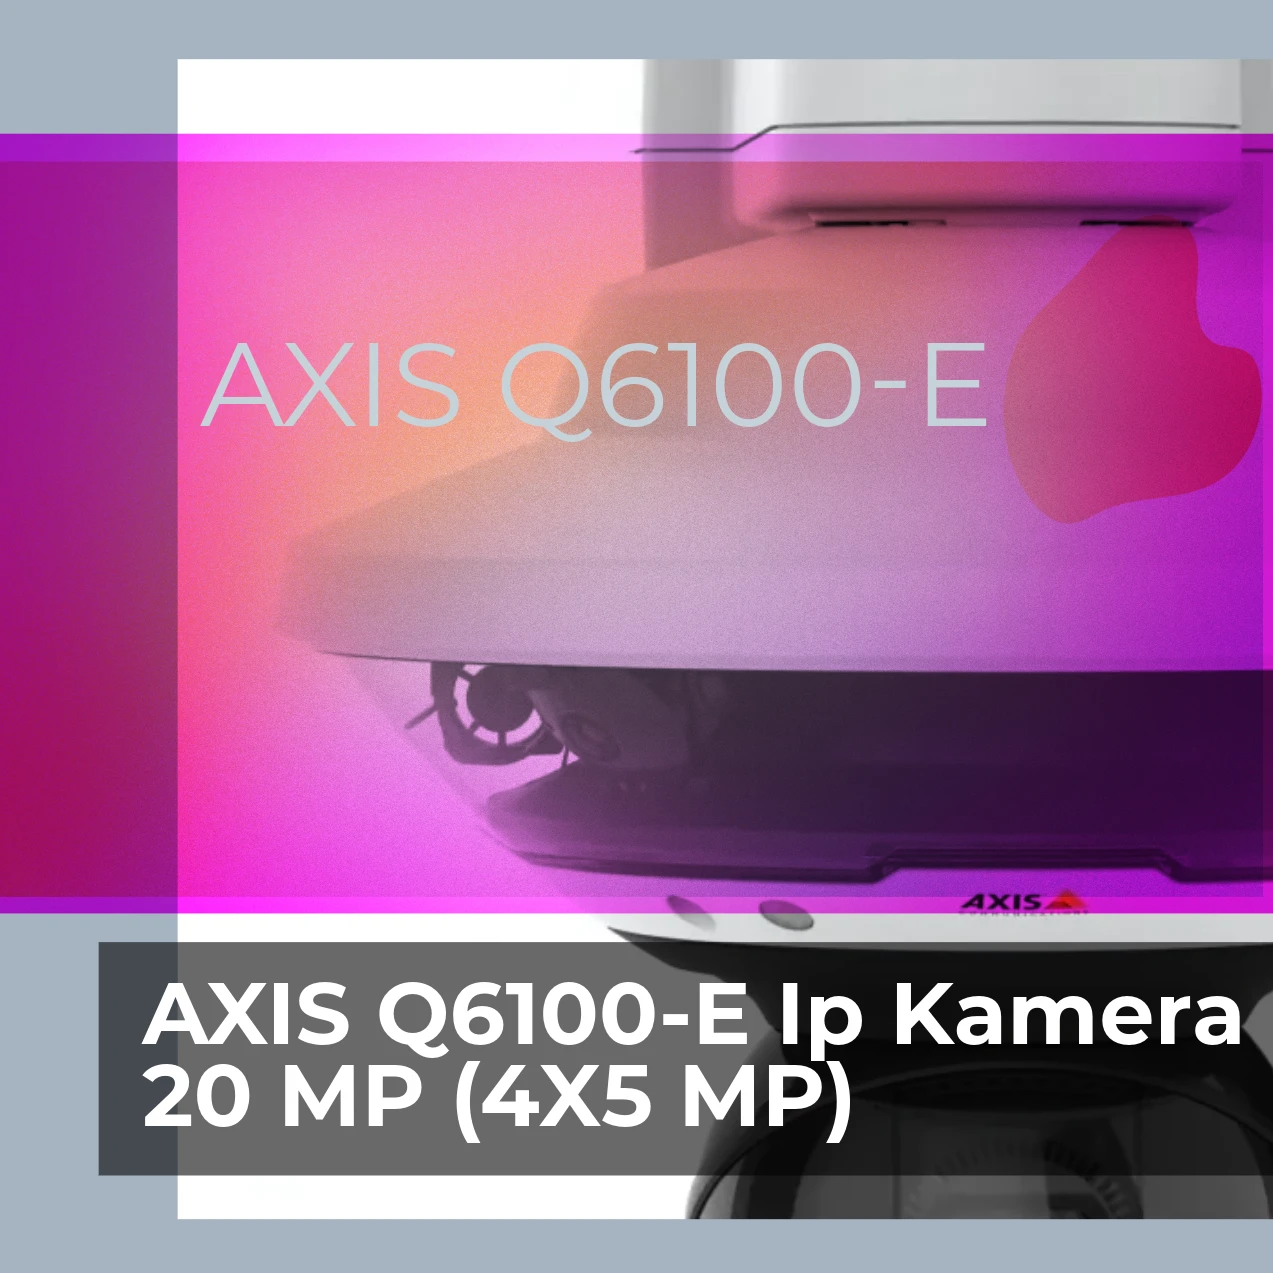 AXIS Q6100-E IP KAMERA 20 MP (4X5 MP)